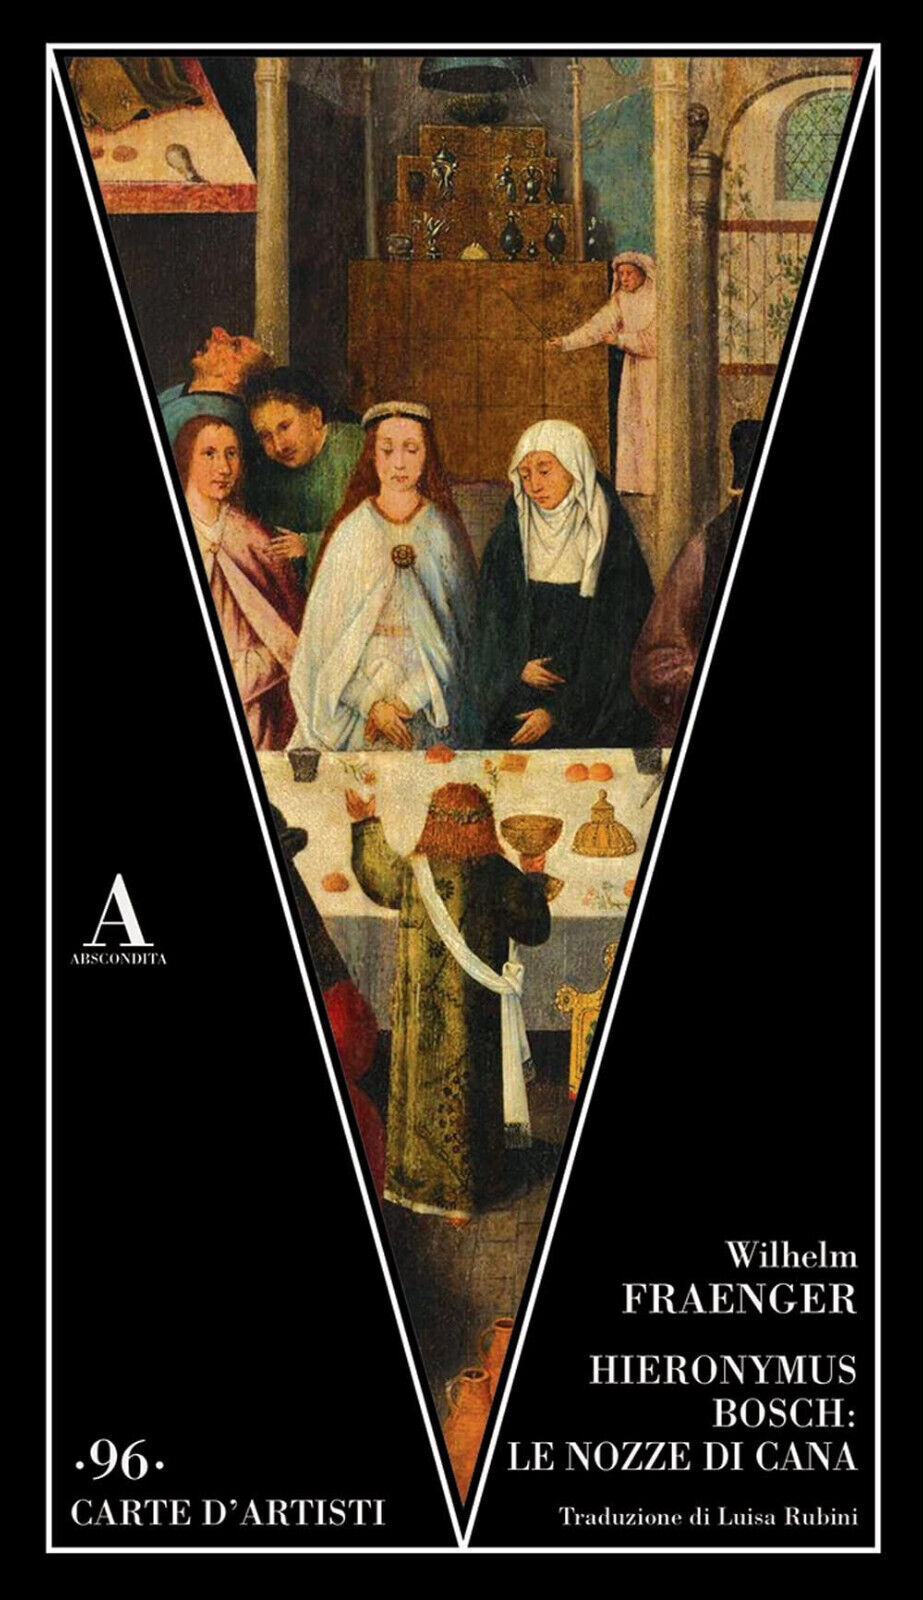 Hieronymus Bosch: le nozze di Cana - Wilhelm Fraenger - Abscondita, 2022